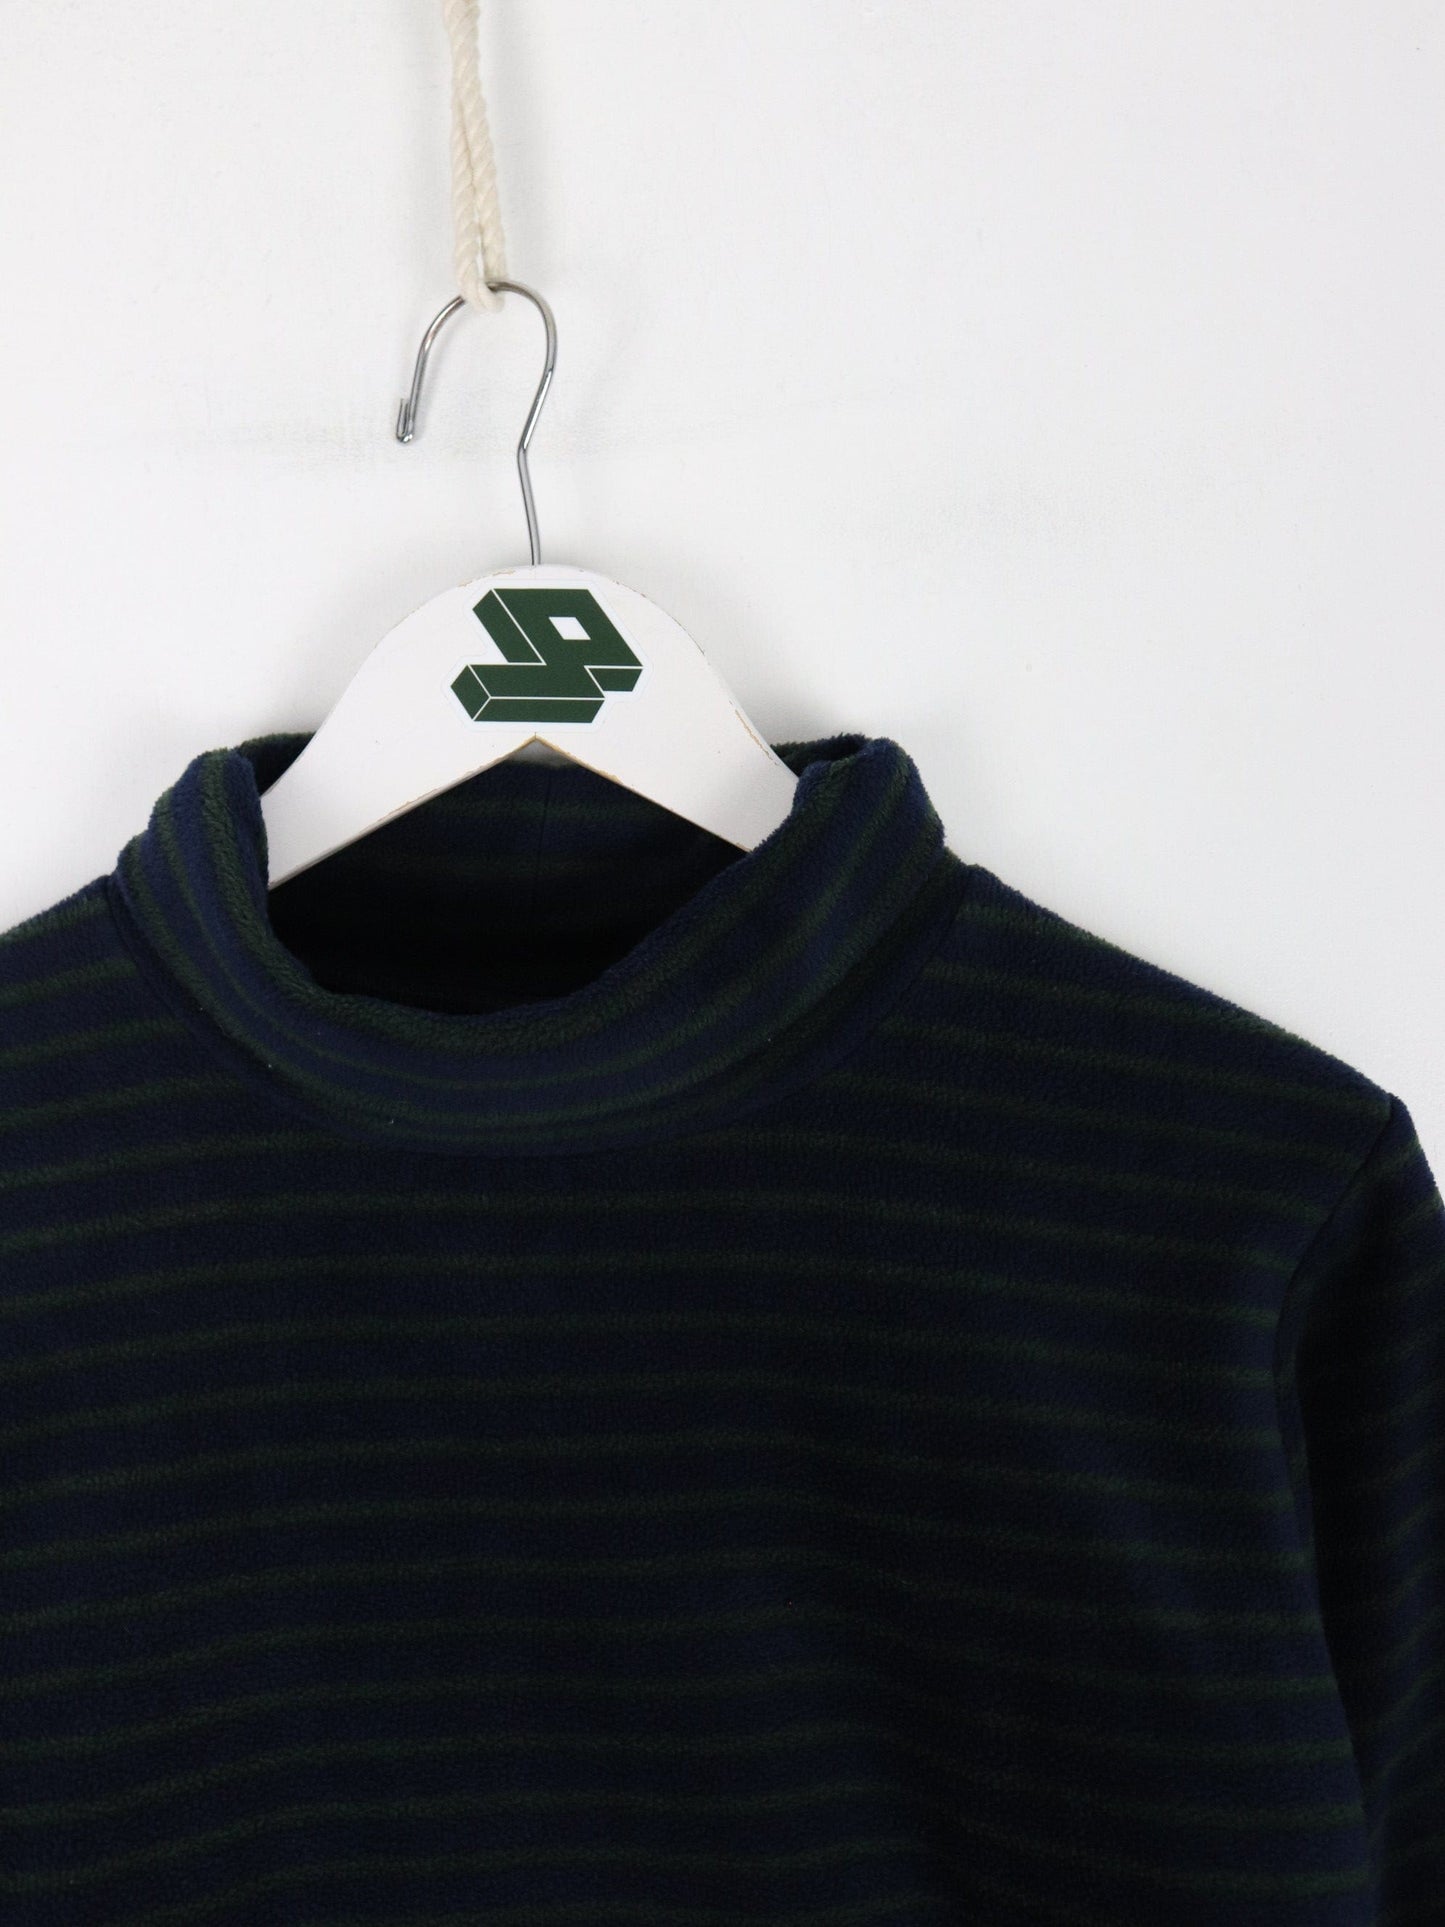 Other Sweatshirts & Hoodies Fleece Sweater Shirt Womens Large Blue Striped Turtle Neck